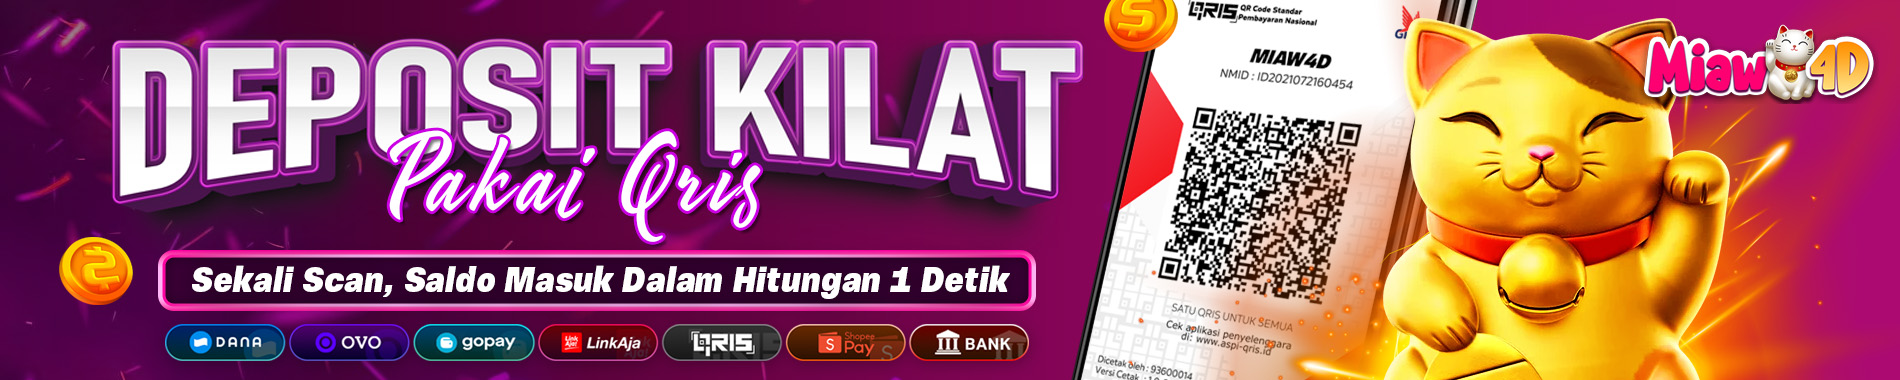 Deposit Kilat Miaw4D